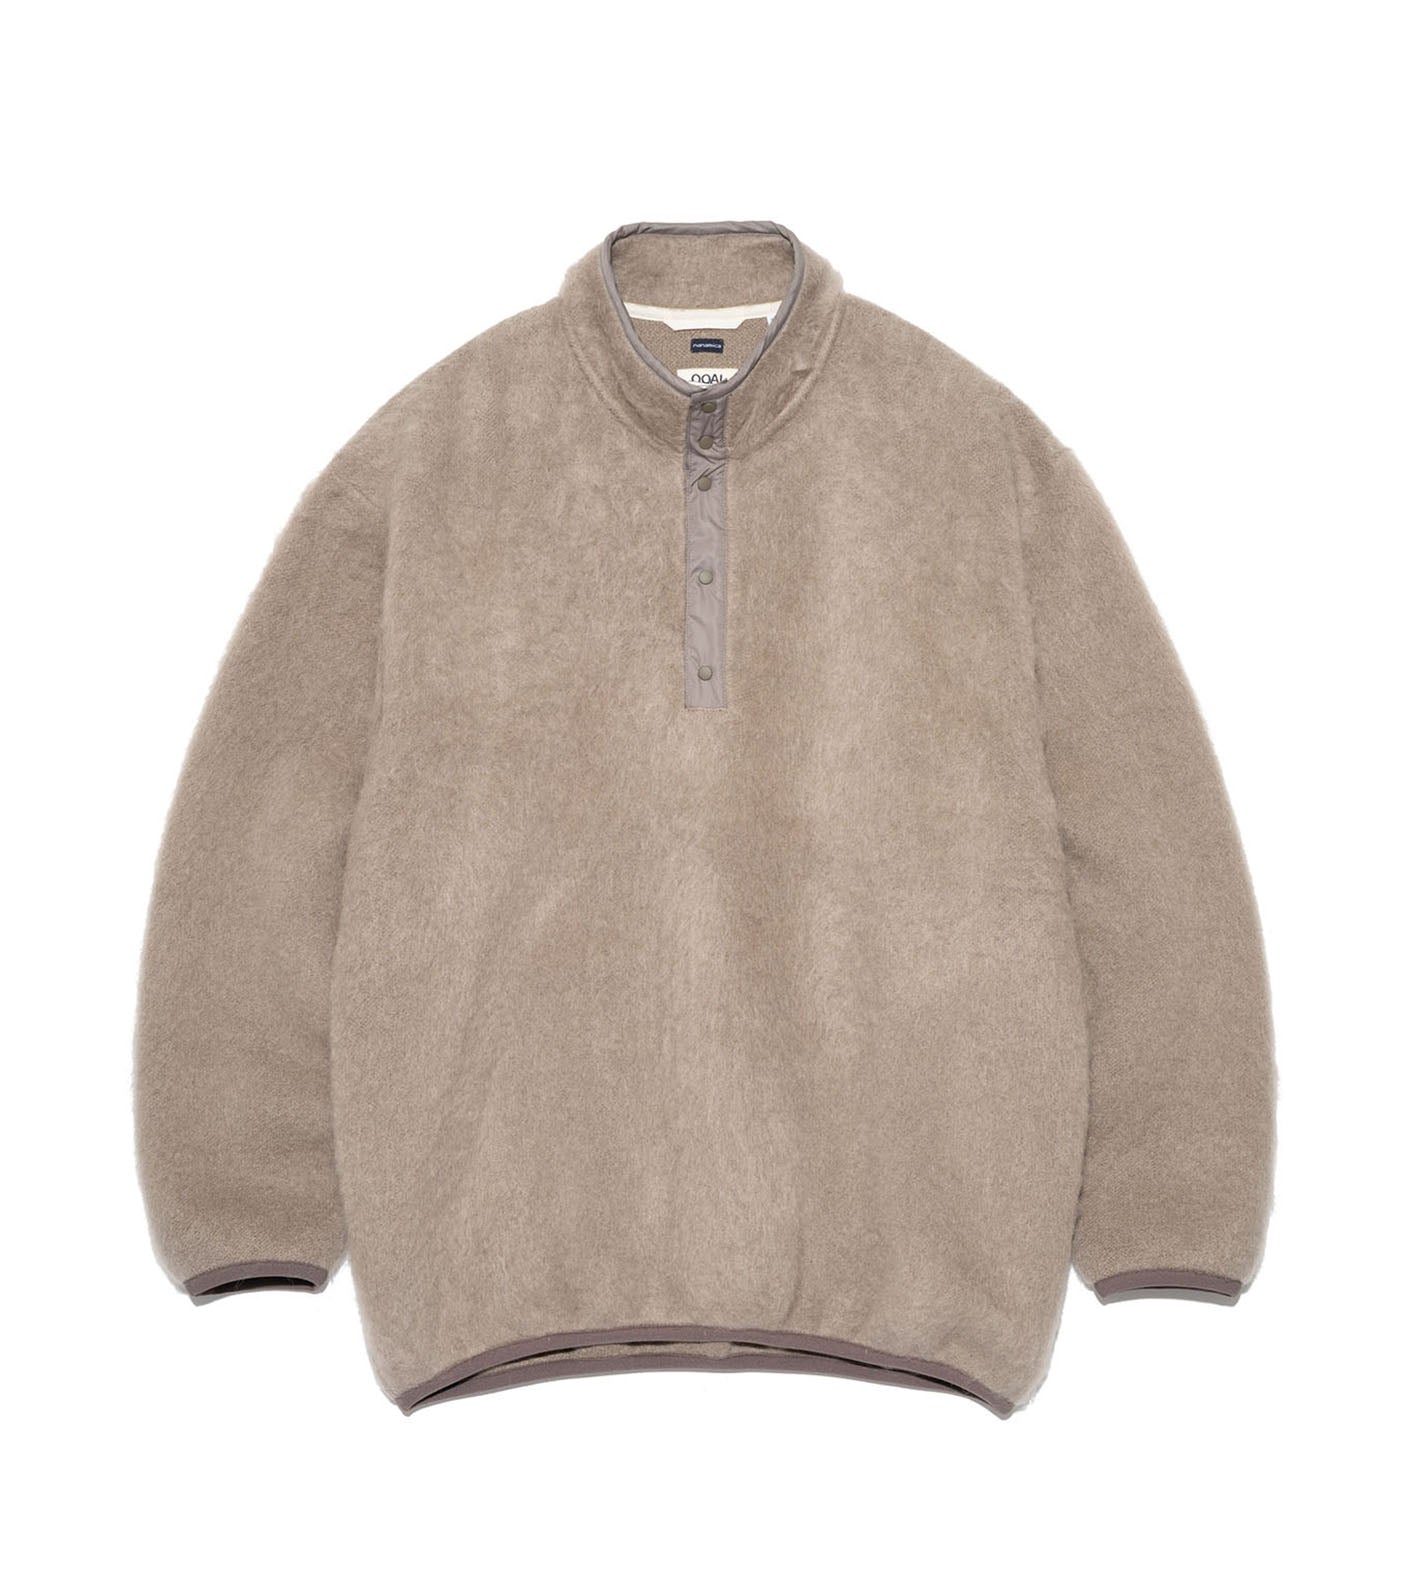 XLサイズ nanamica Pullover Sweater31900円 - トップス